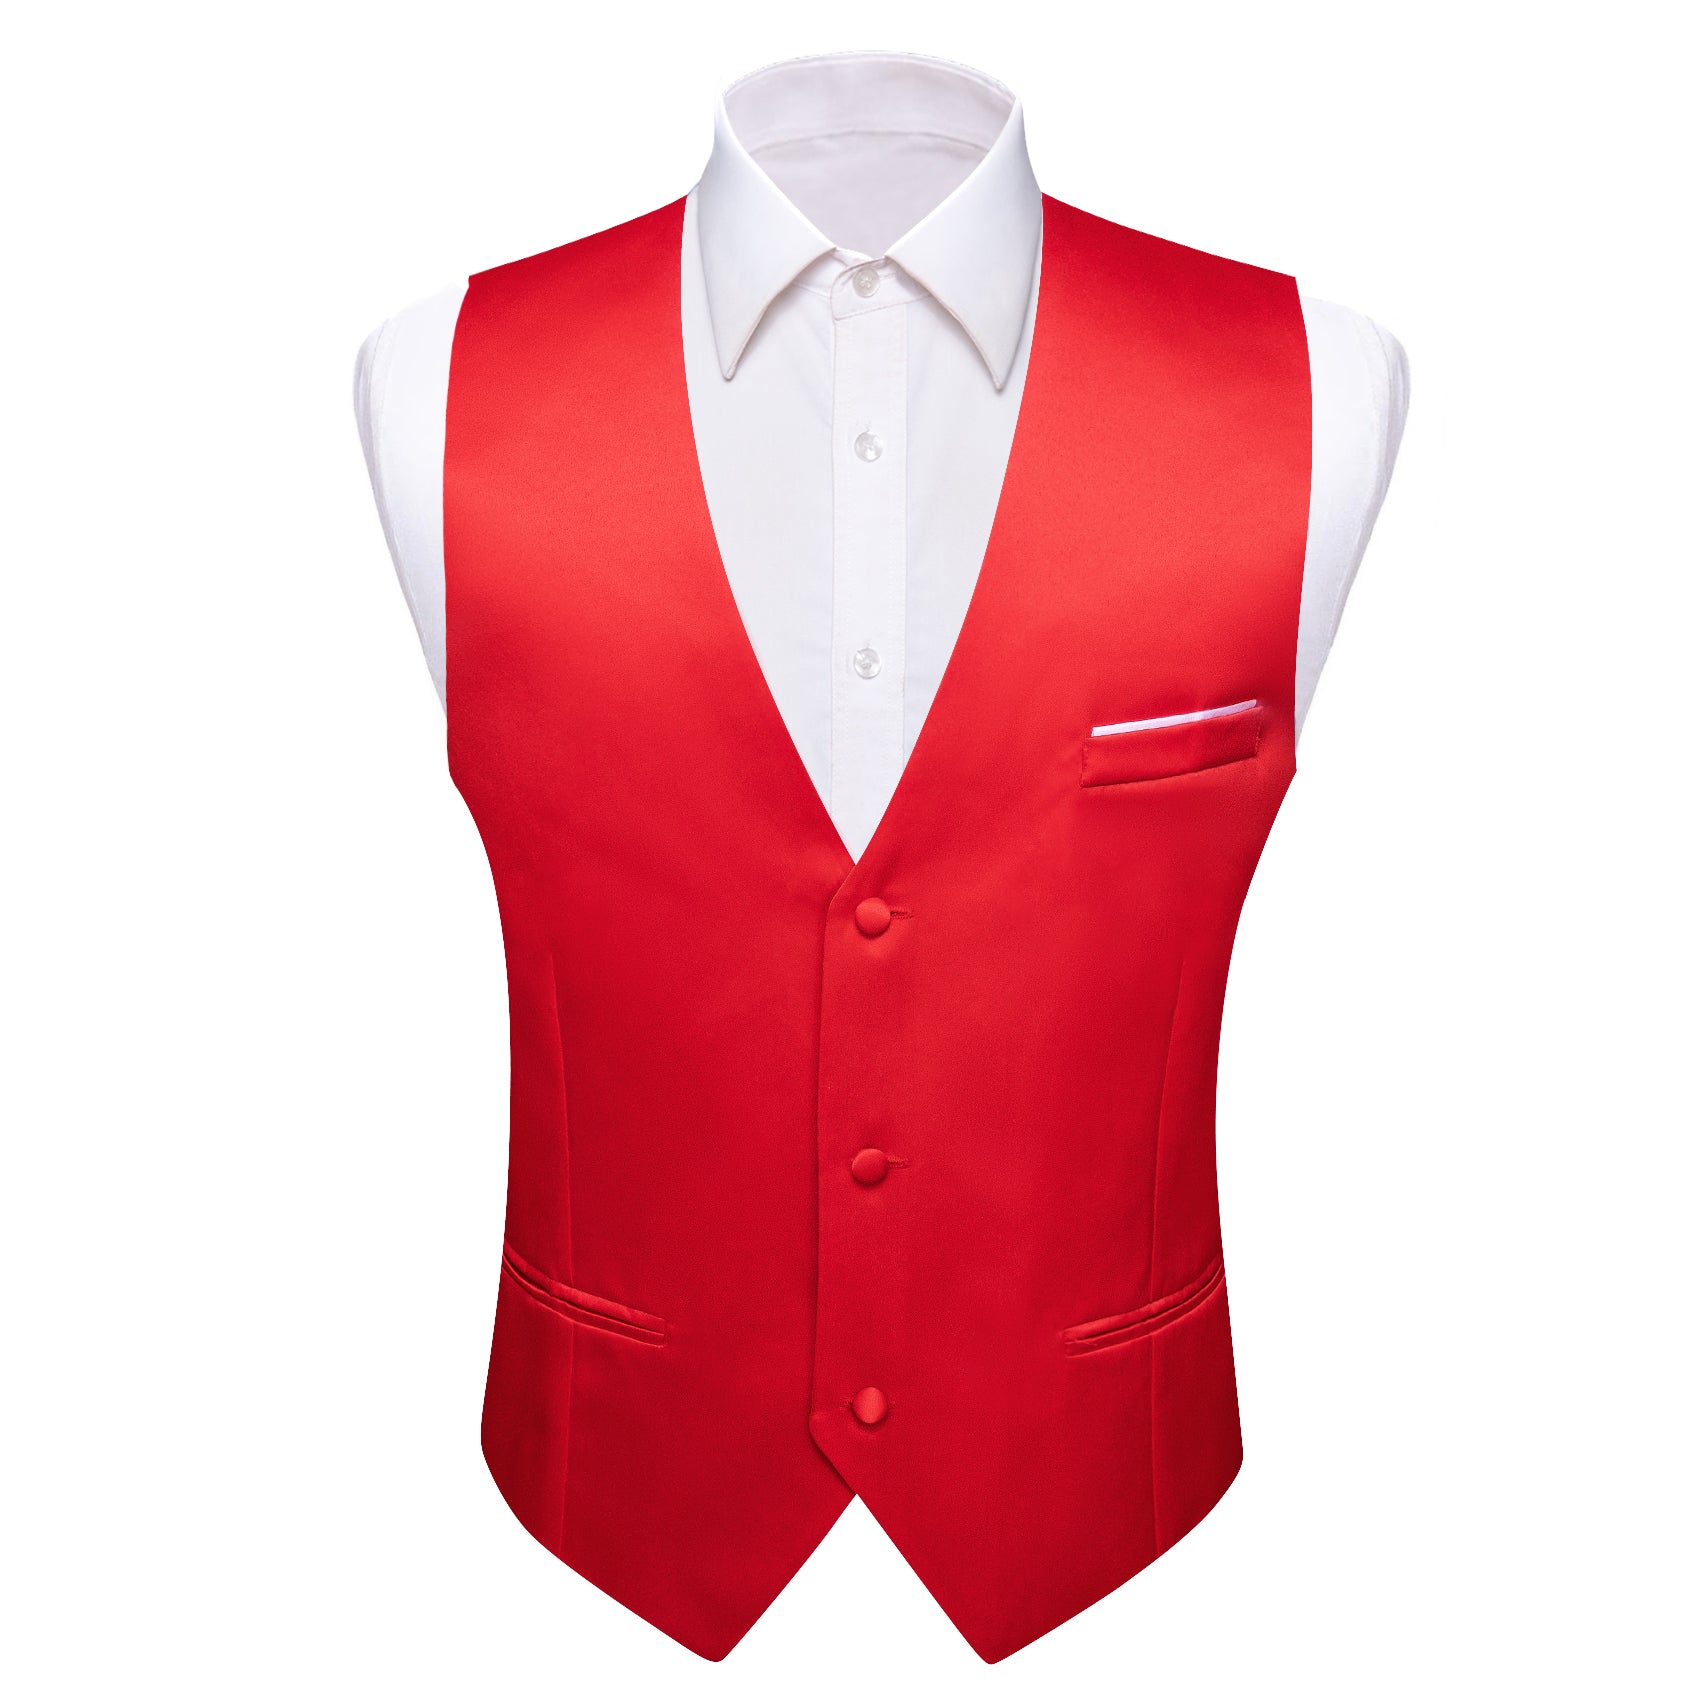 Barry.wang Men's Work Vest Red Solid Silk Business Vest Suit